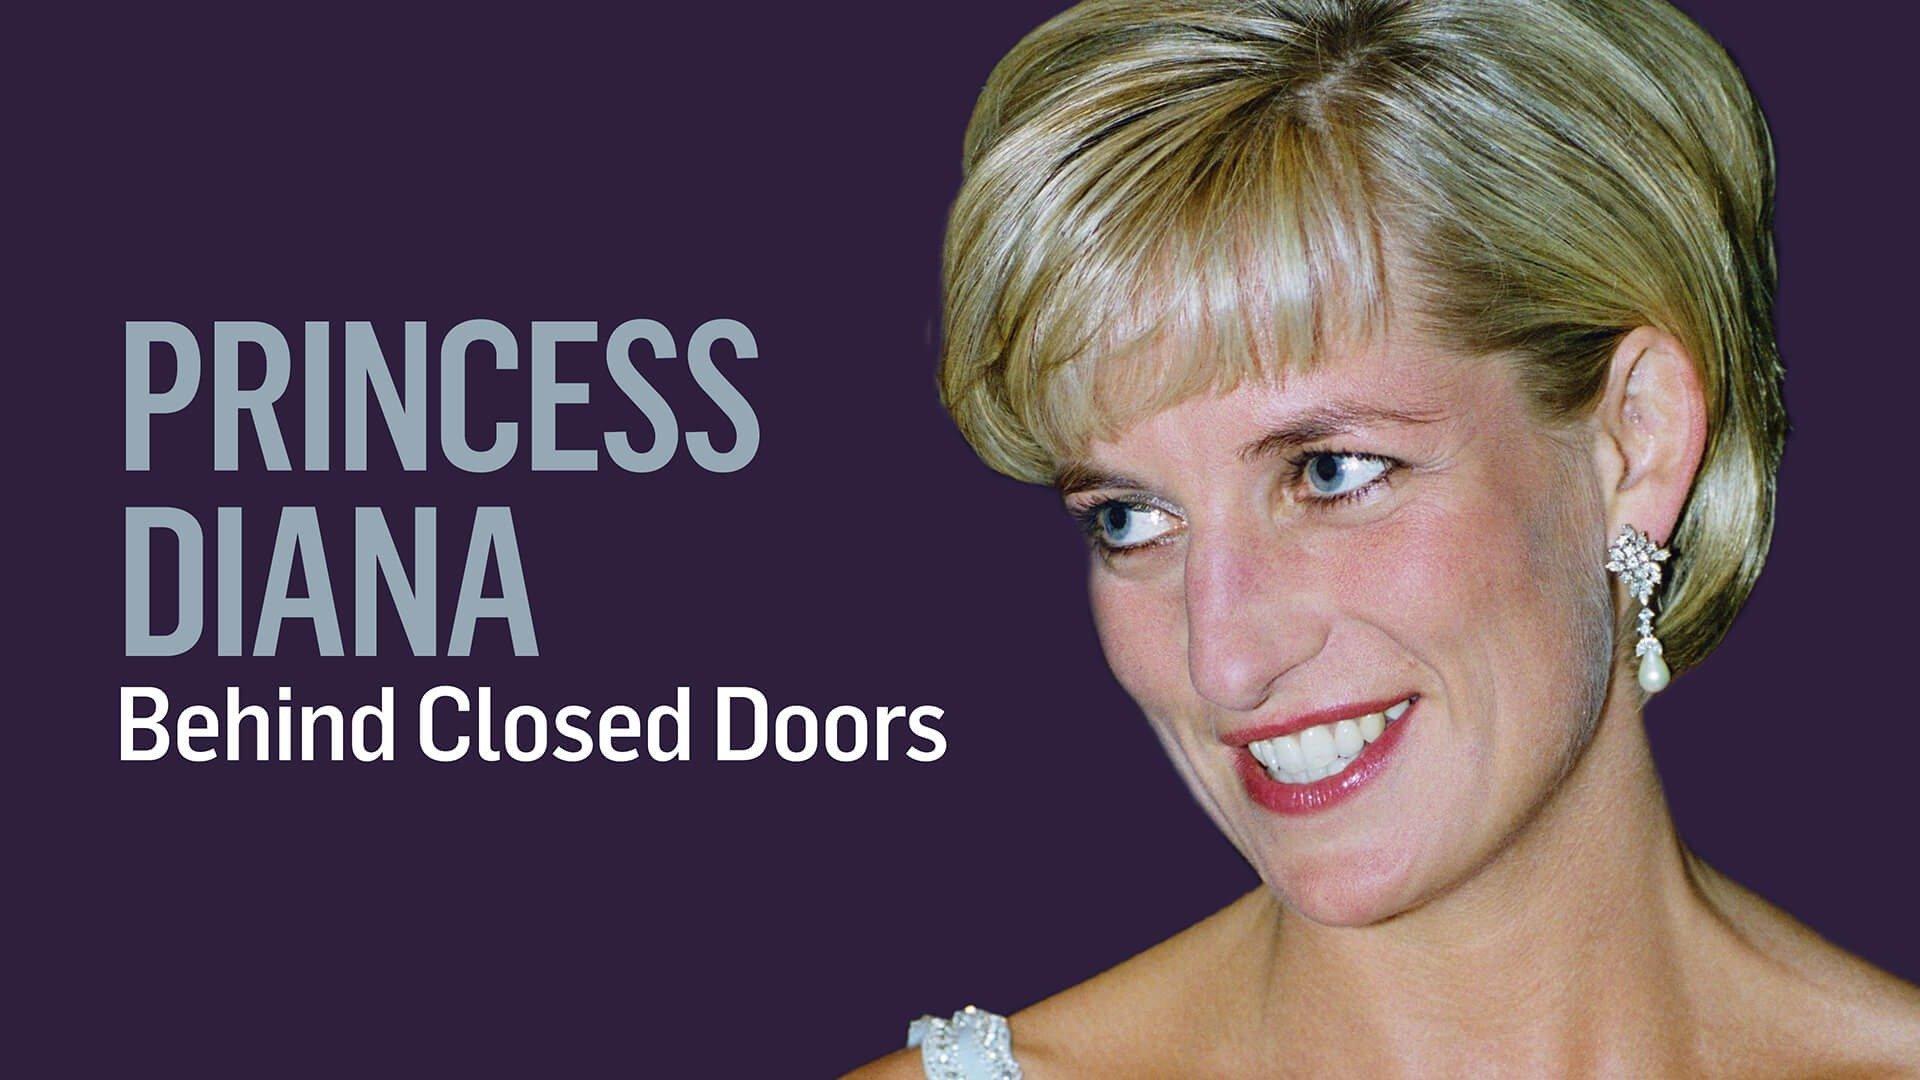 Princess Diana: Behind Closed Doors on Philo